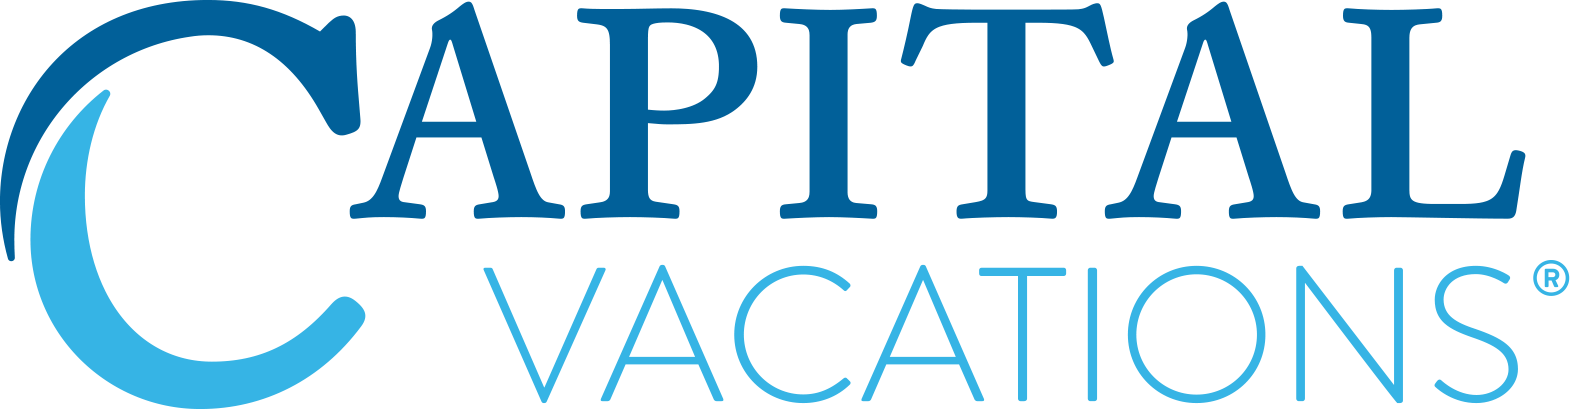 Capital-Vacations-logo.png